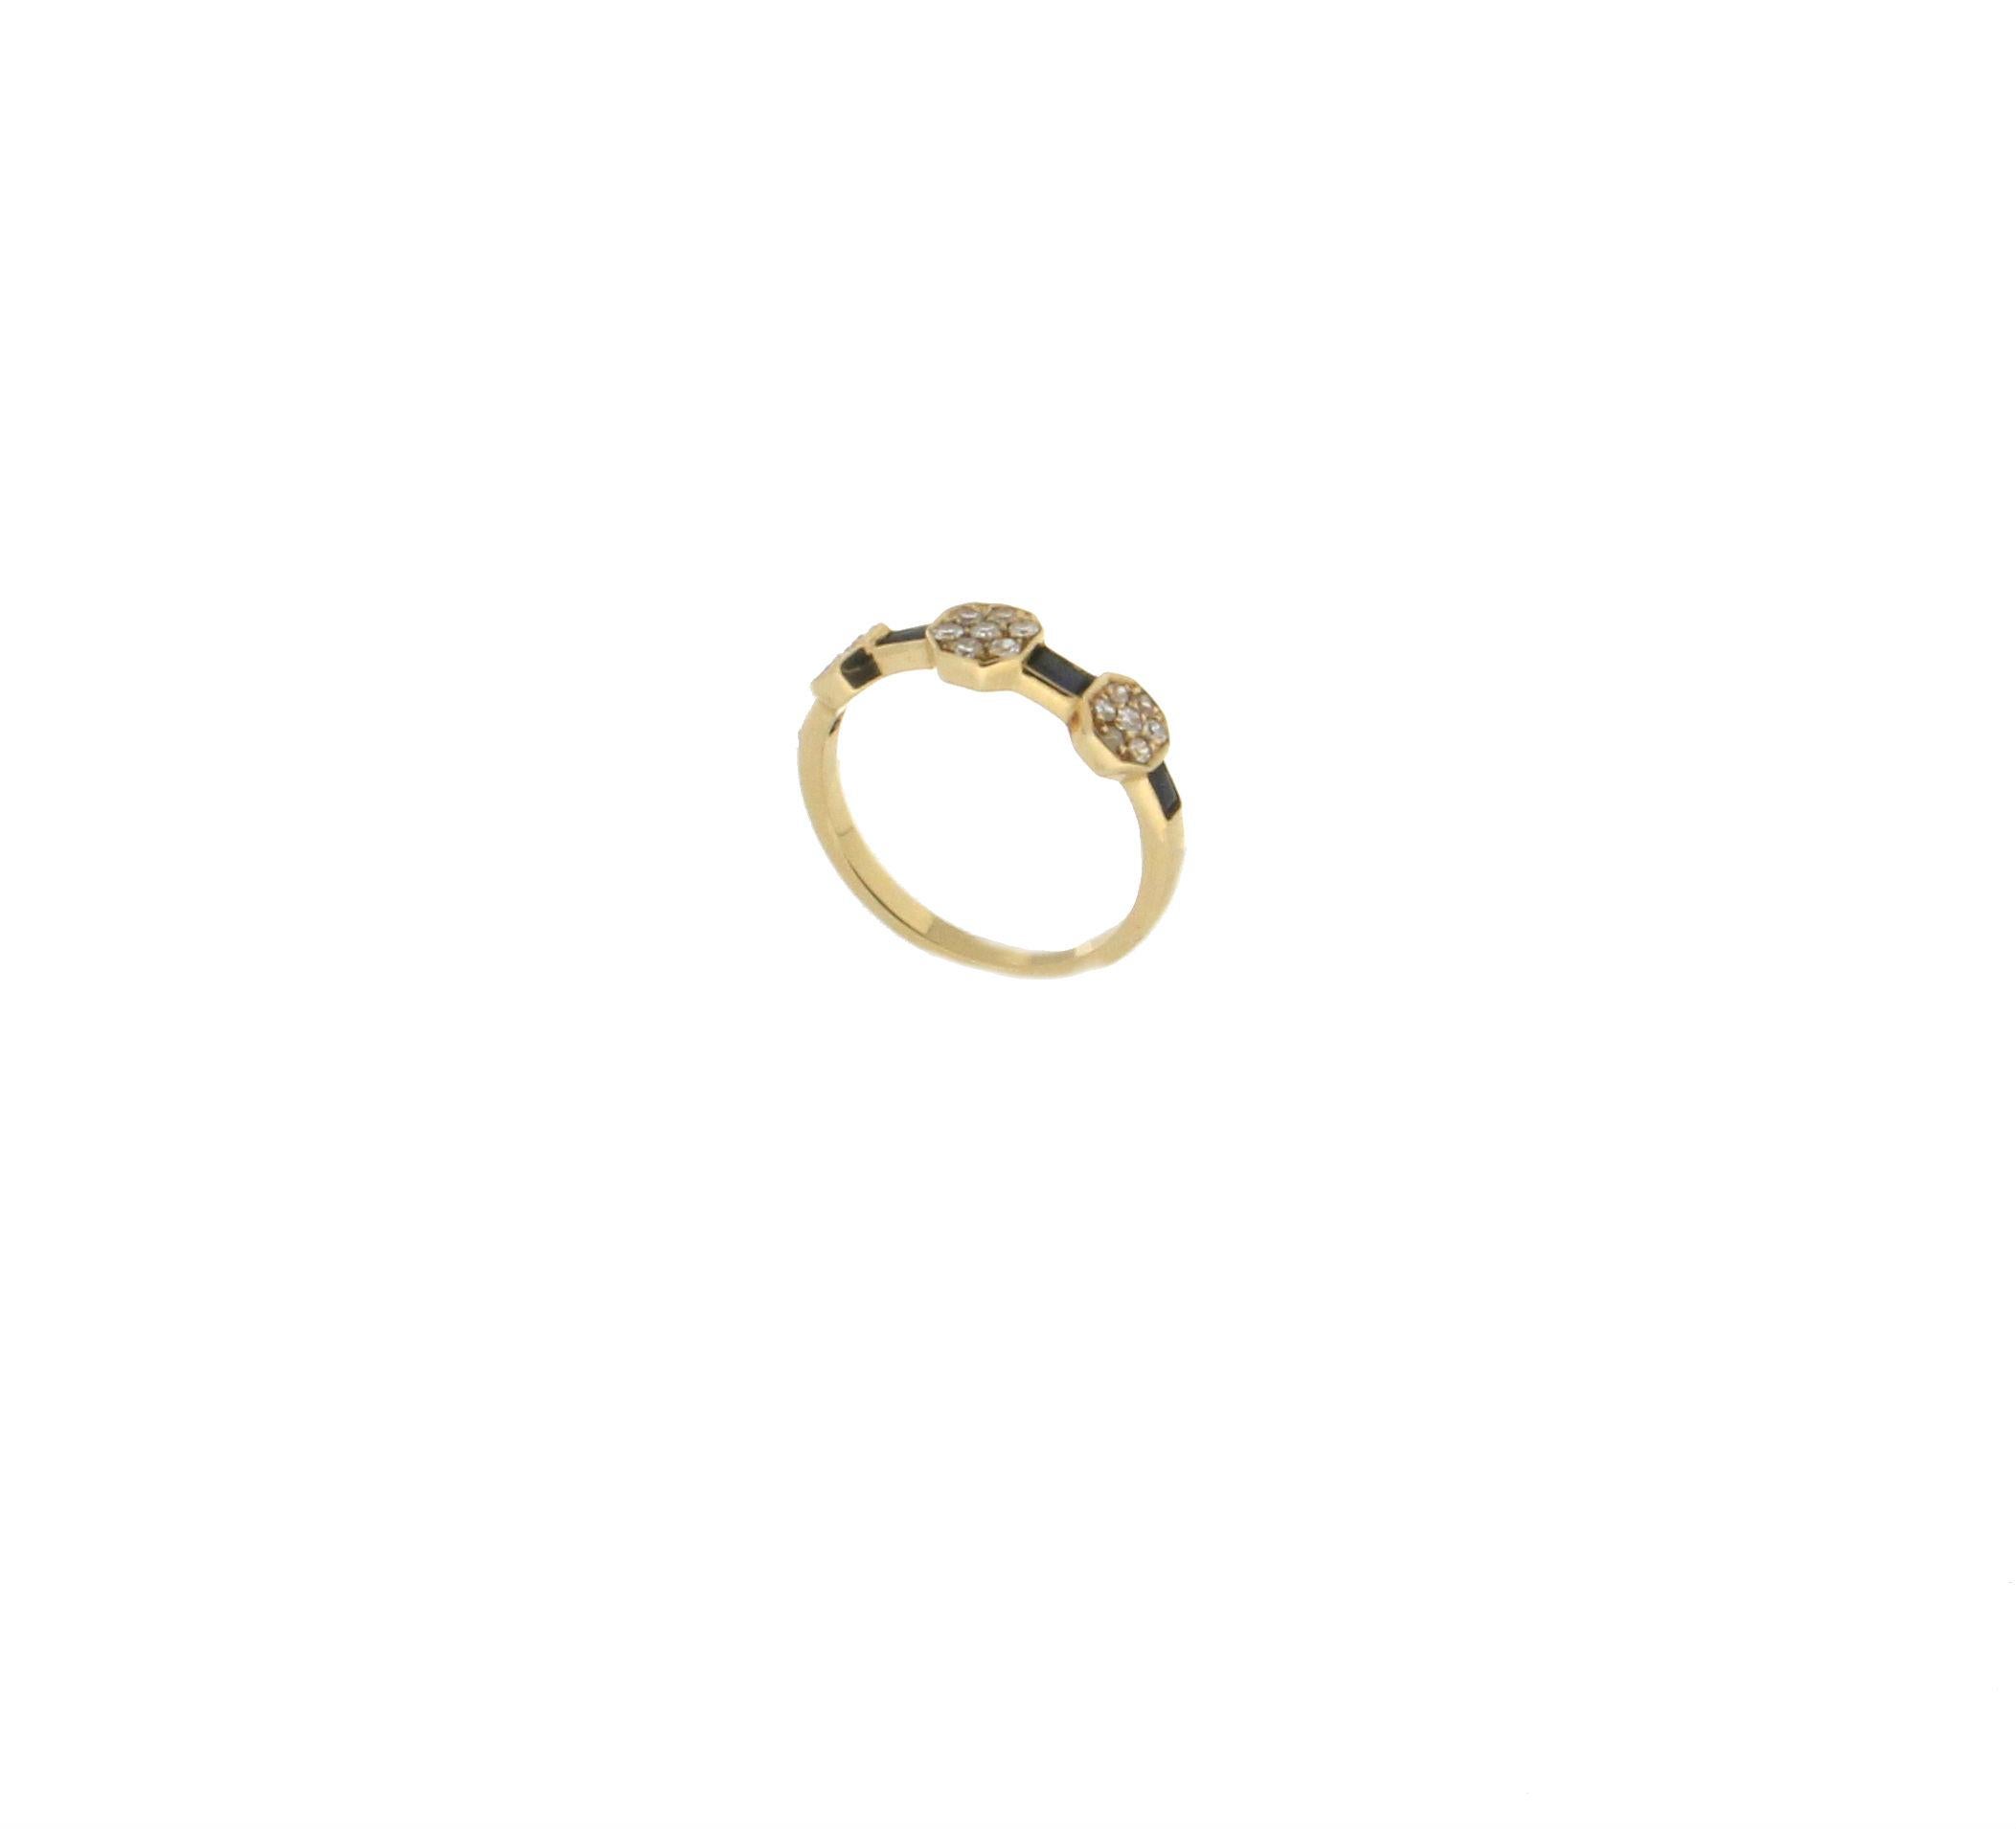 Artisan Handcraft Sapphire 18 Karat Yellow Gold Diamonds Cocktail Ring For Sale